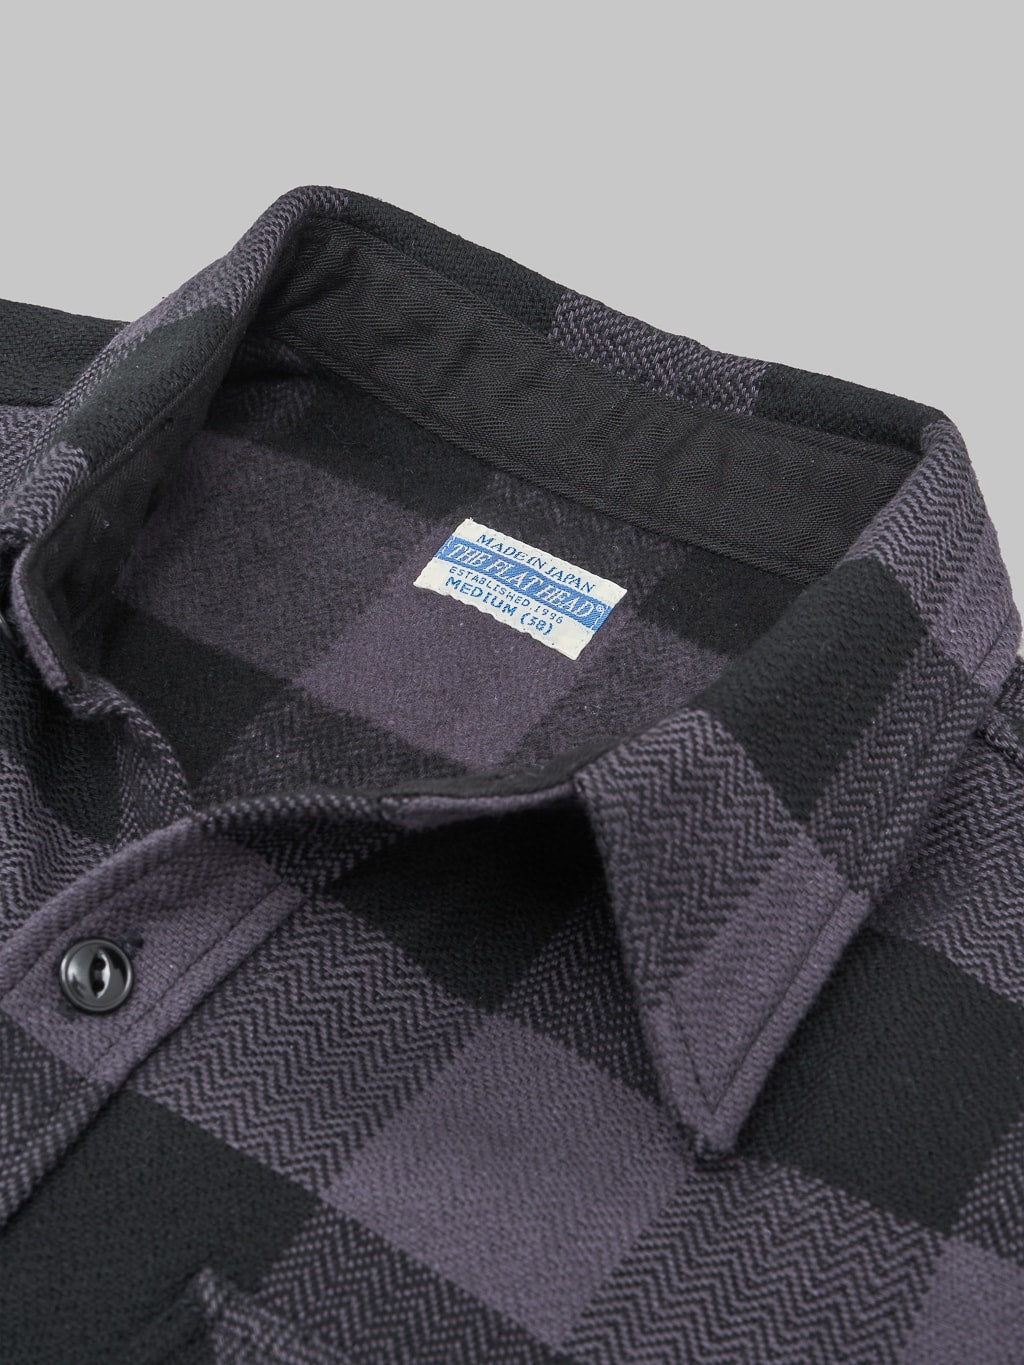 The Flat Head Block Check Flannel Shirt Grey collar fabric